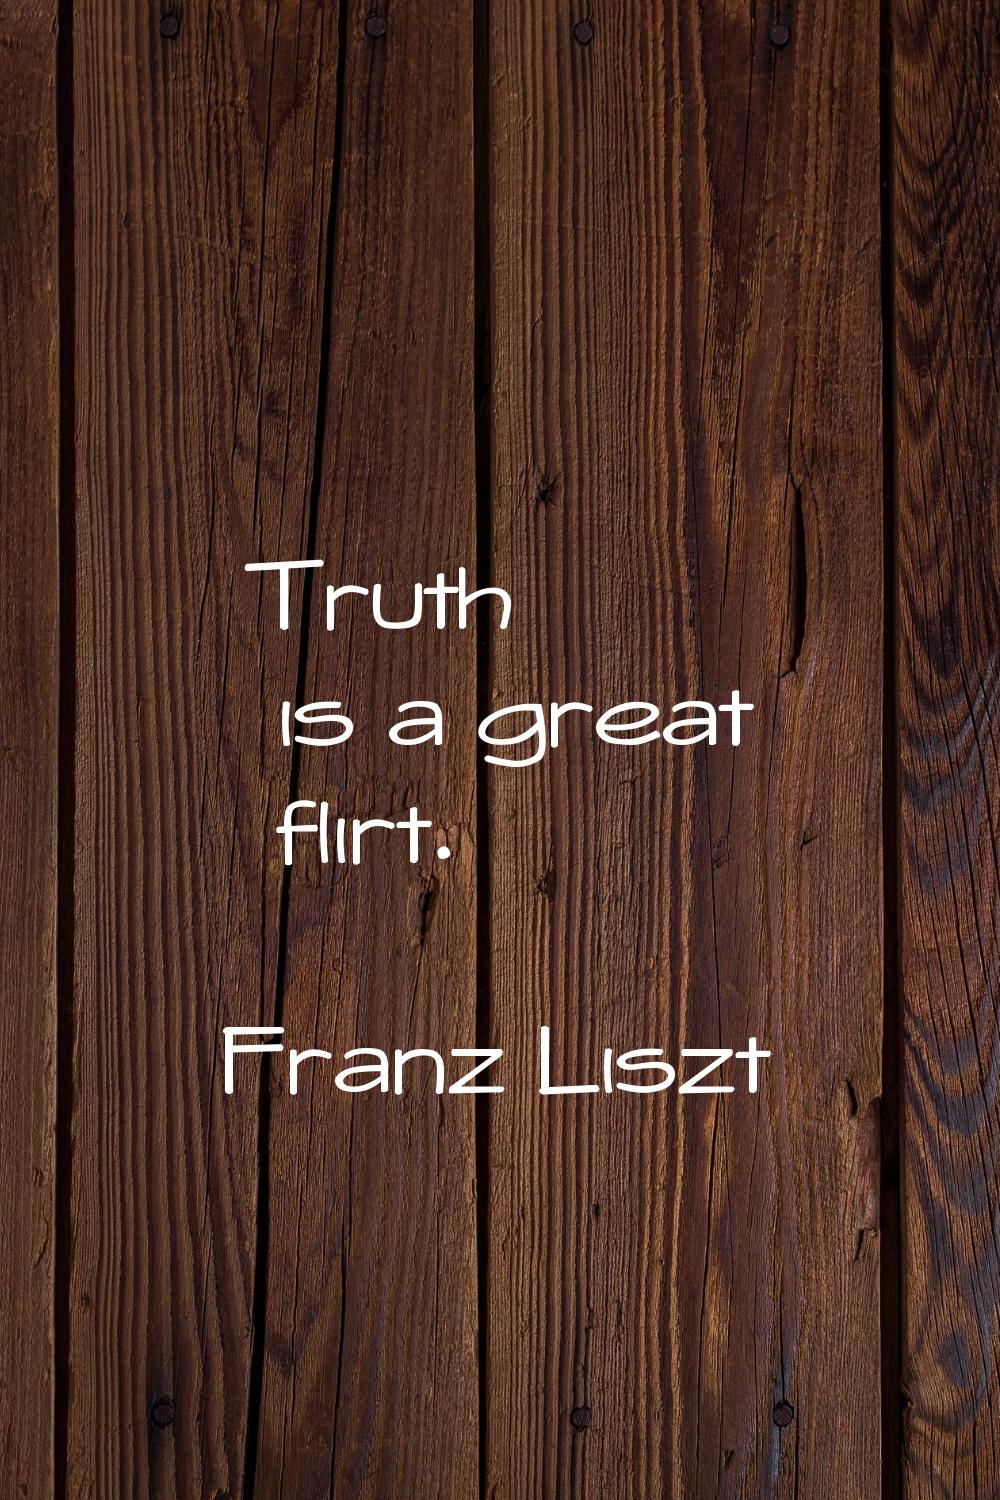 Truth is a great flirt.